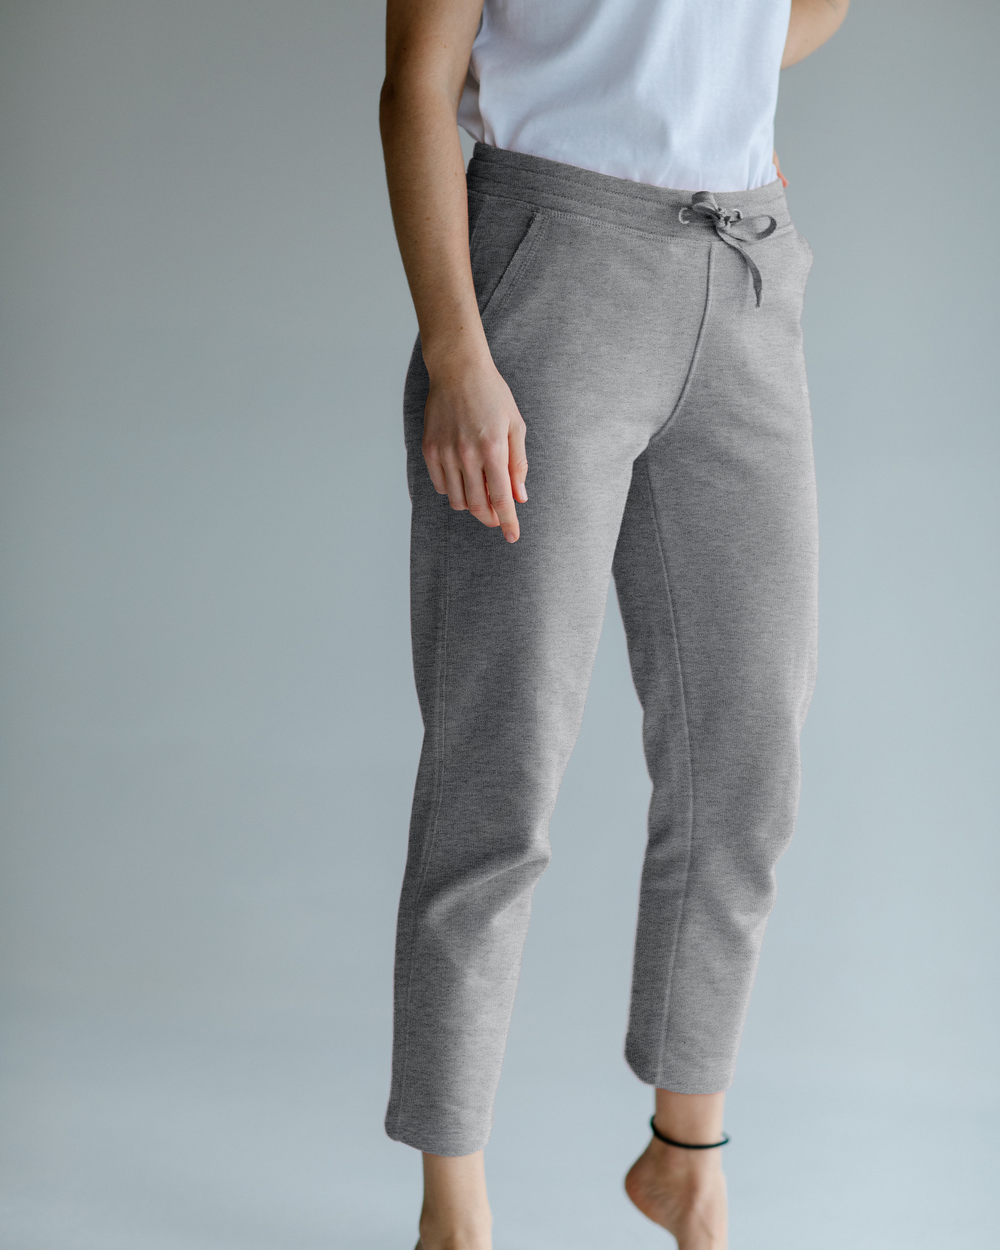 I AM WILD Sweatpants (heather grey)